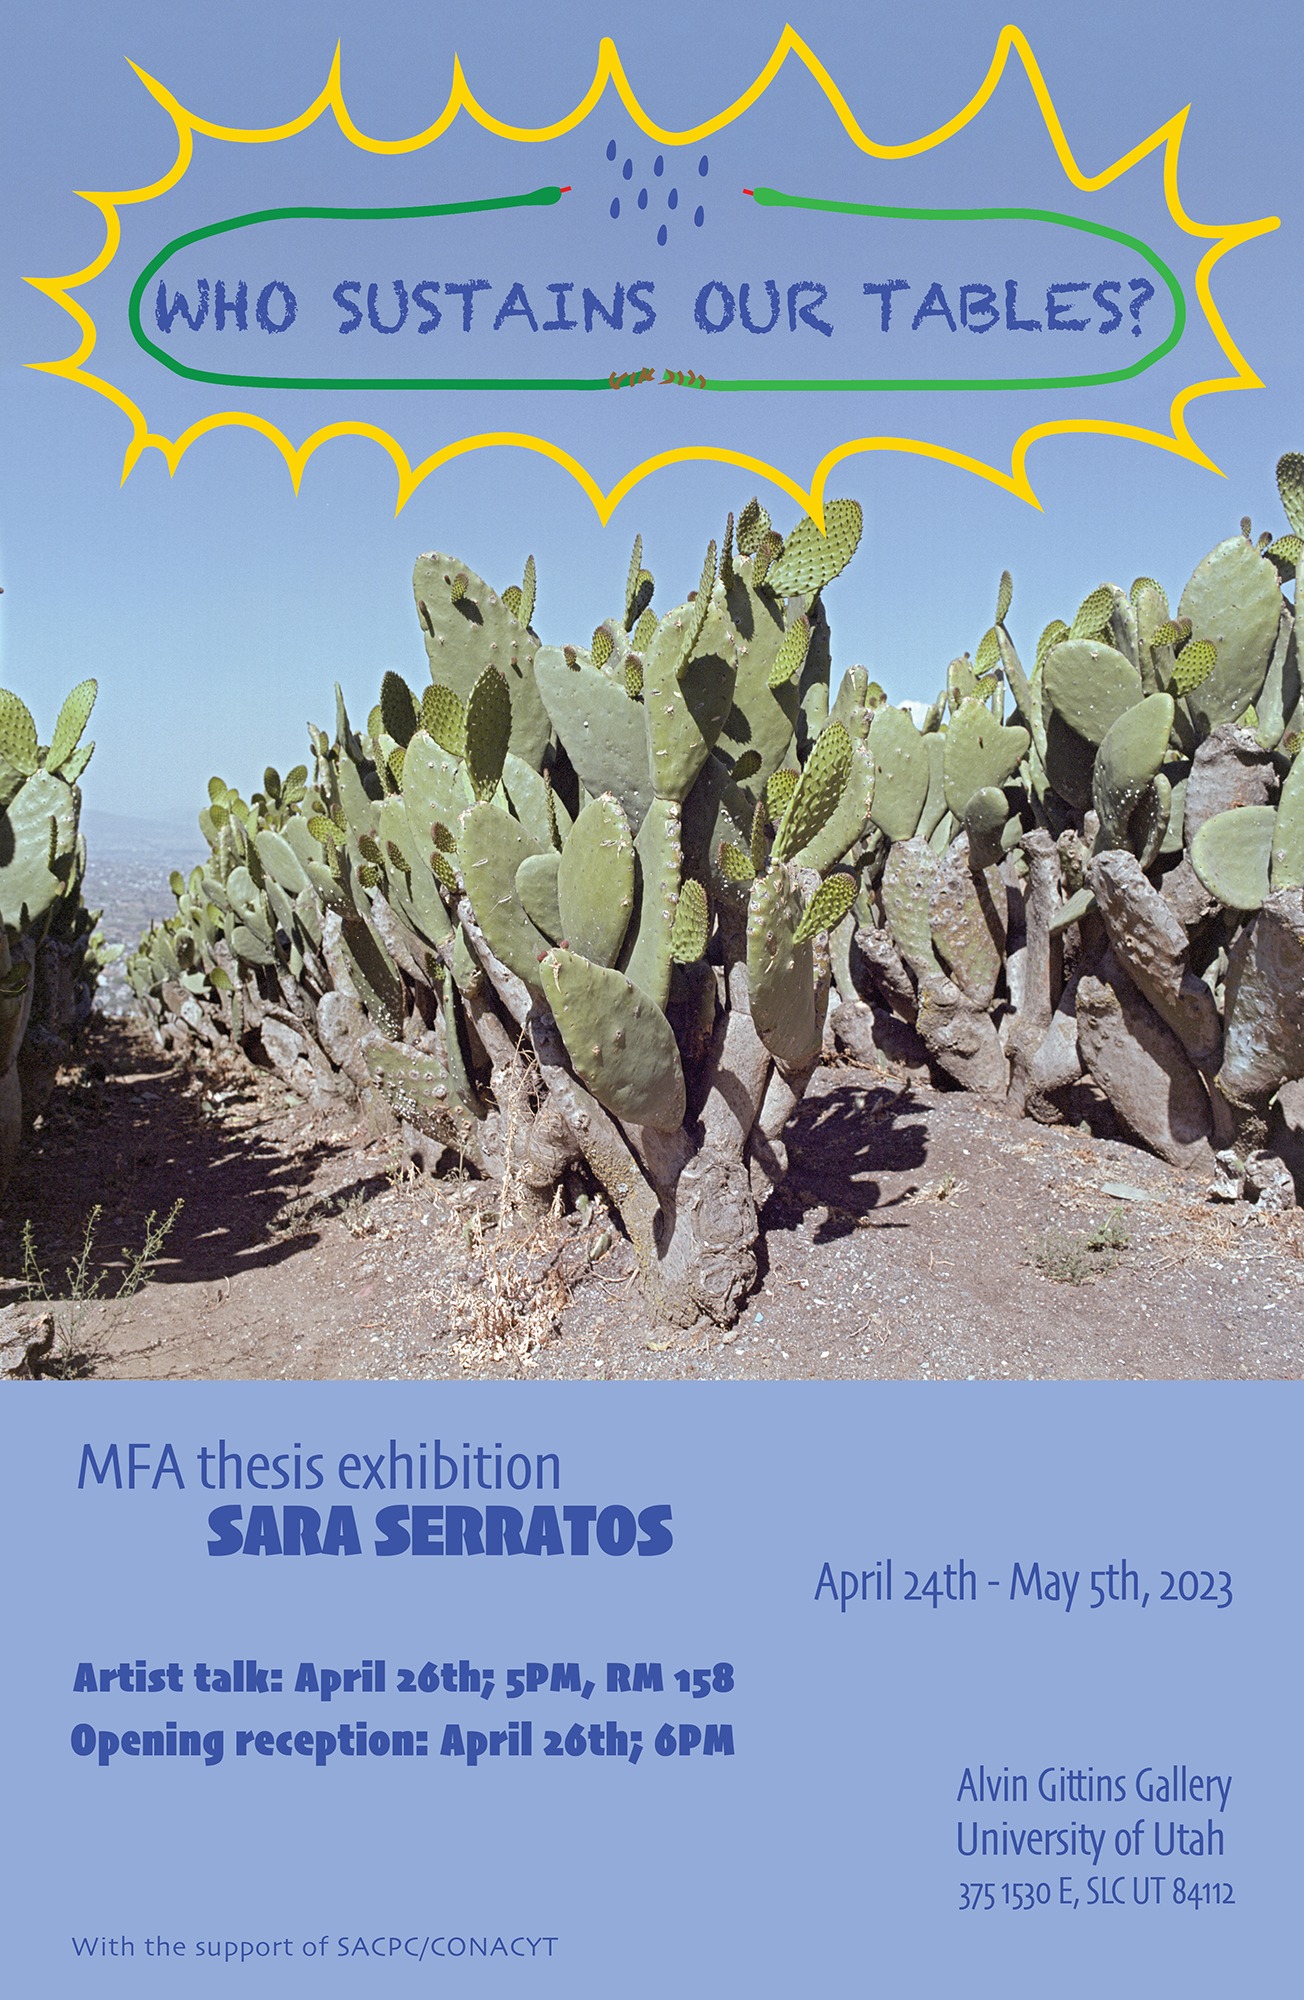 Sara Serratos poster for her MFA Thesis exhibition